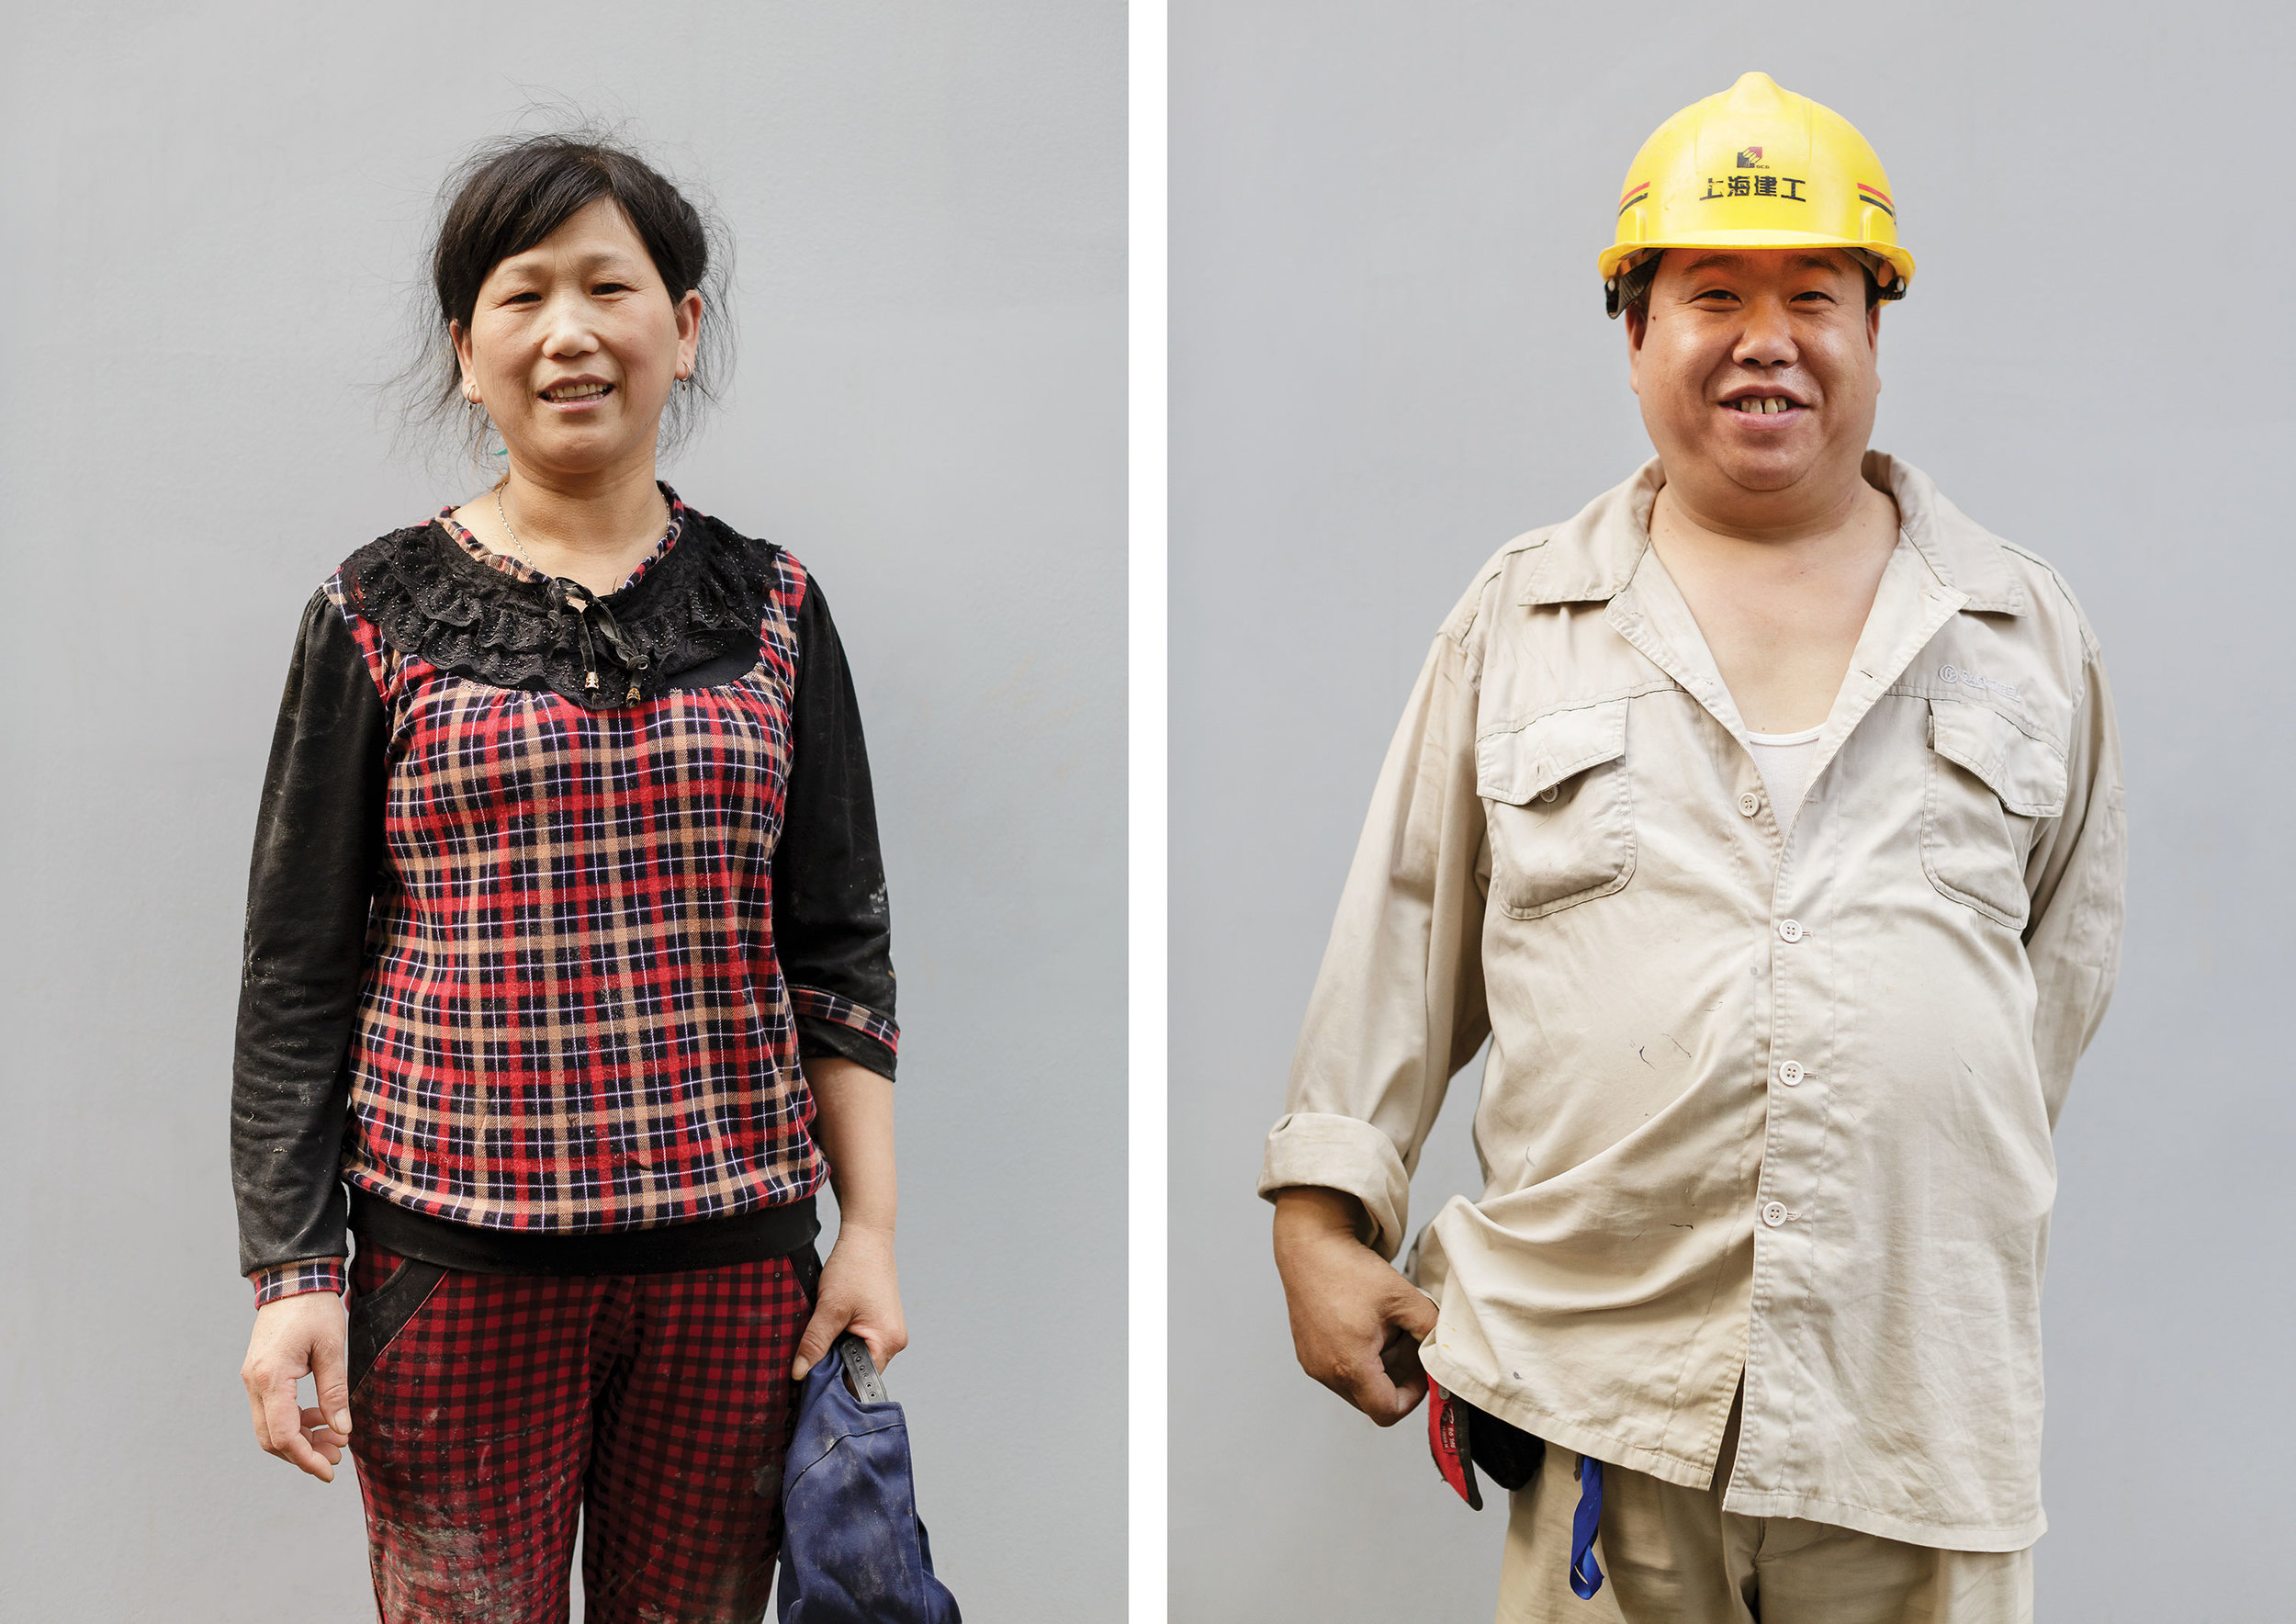 Shanghai_Tower-workers-and-building9.jpg